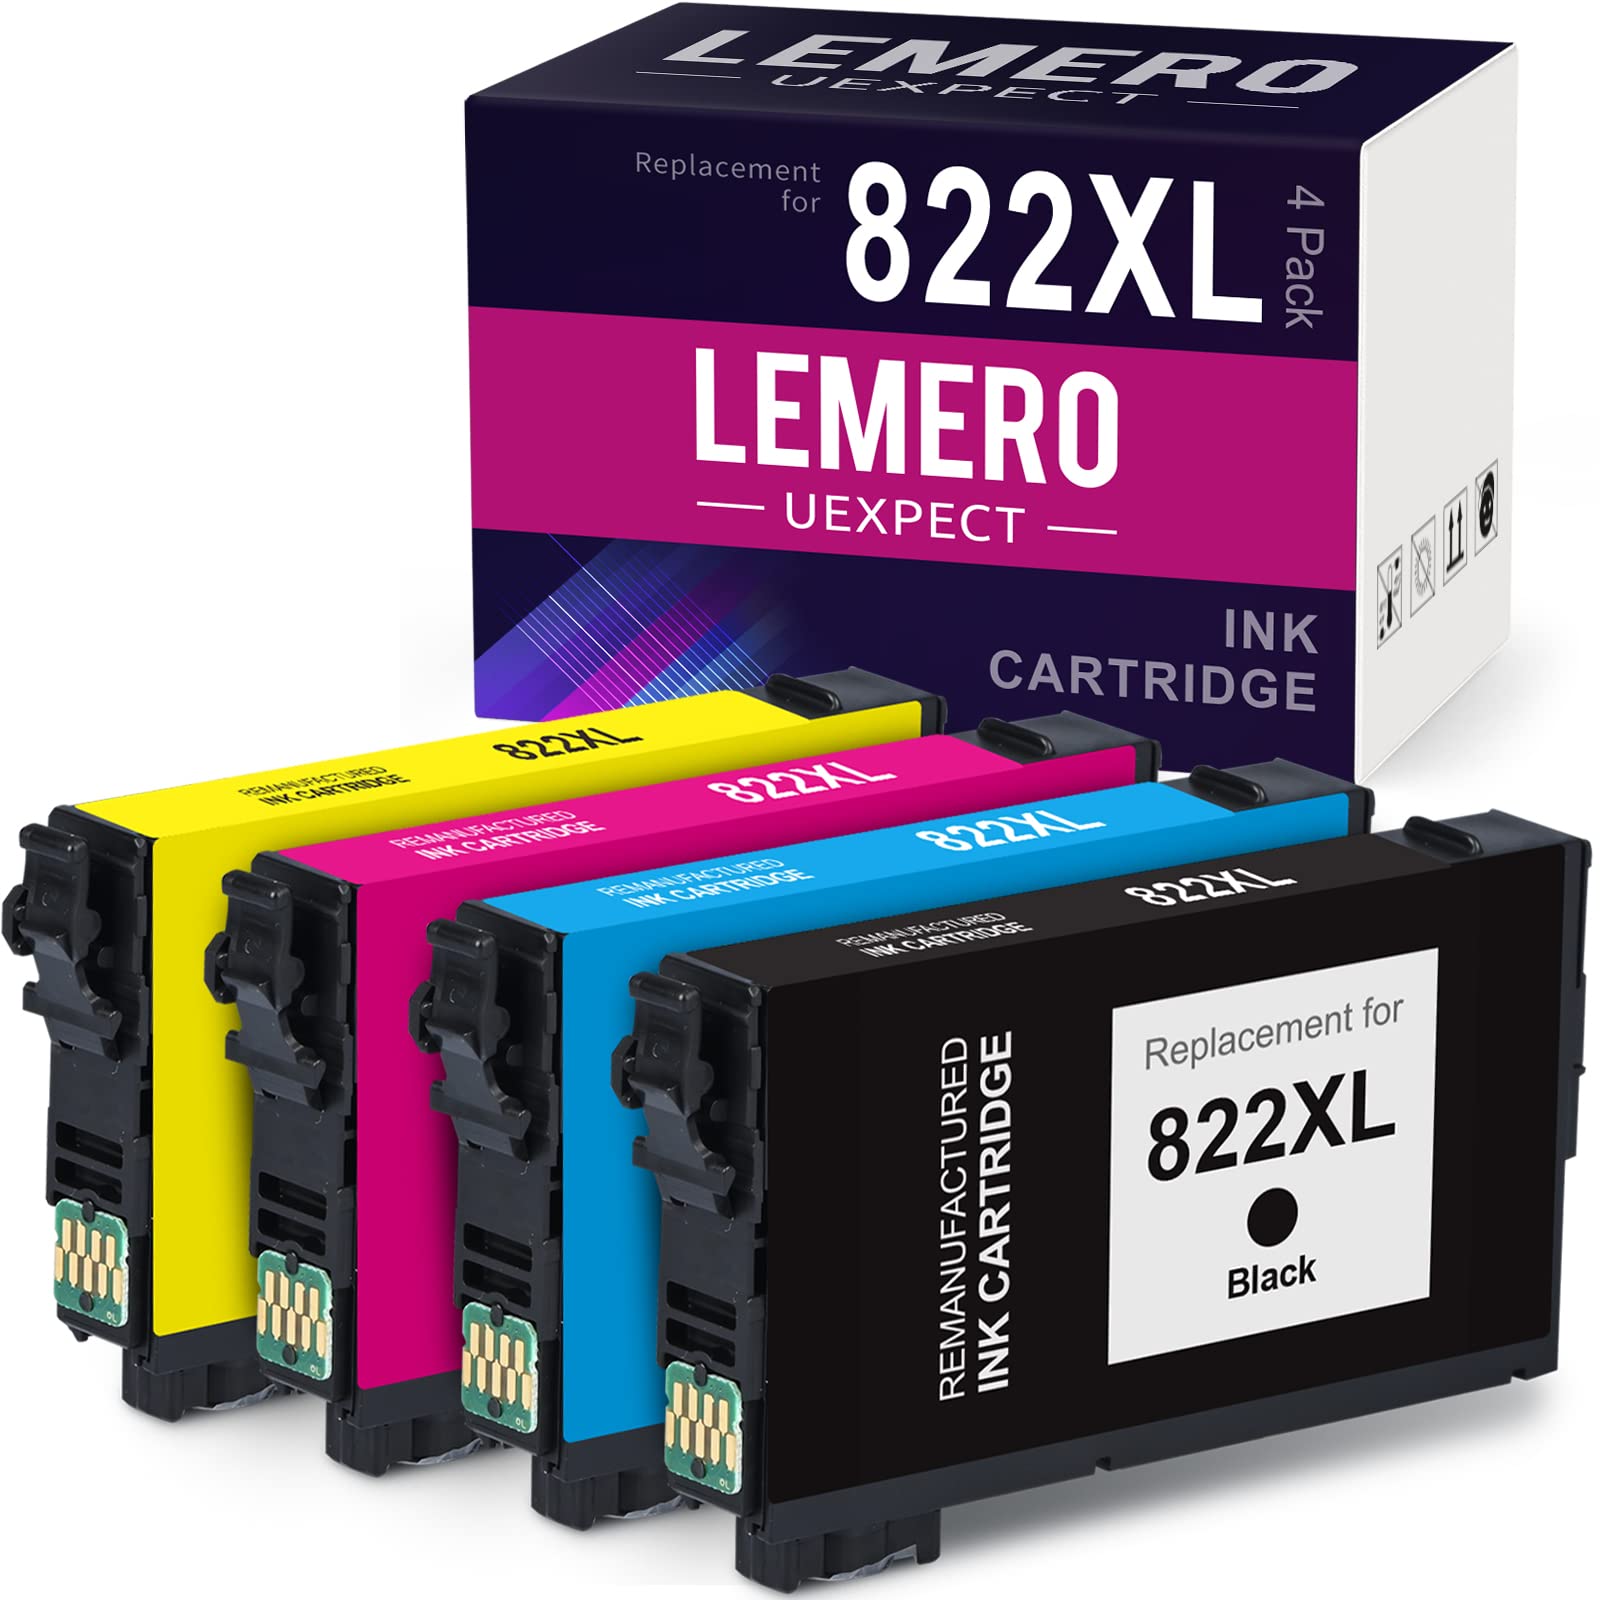 LEMERO UEXPECT 再生インクカートリッジ Epson 822XL T822XL 822 XL コンボパック Workforce Pro WF-3820 WF-4830 W